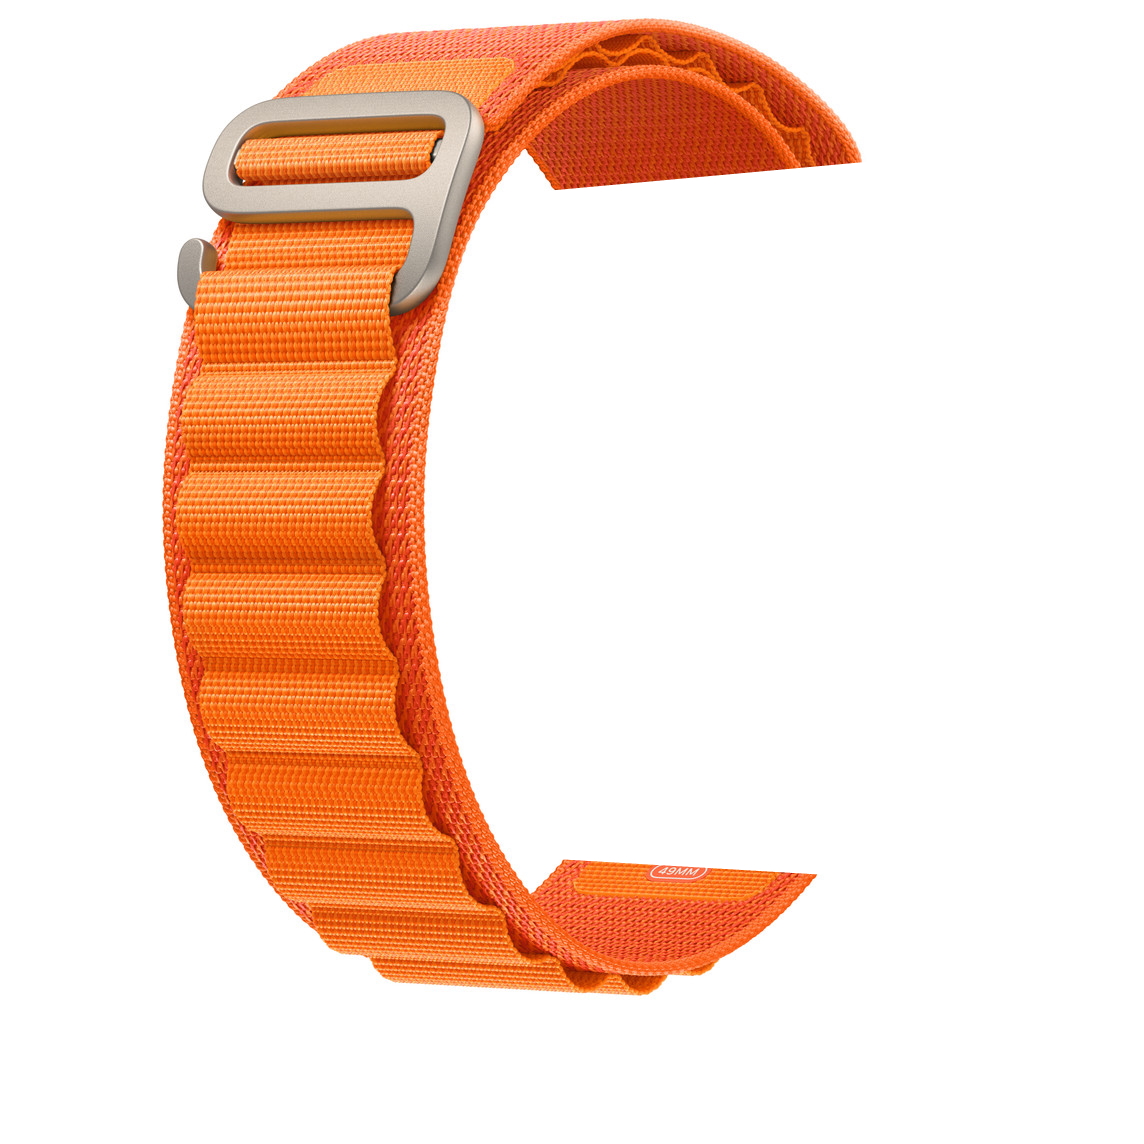 Bratara NylonStrap compatibila Smartwatch Ultra Watch IdealStore, Textila, Fara cusaturi ,Dimensiune 49 mm, Orange Edition